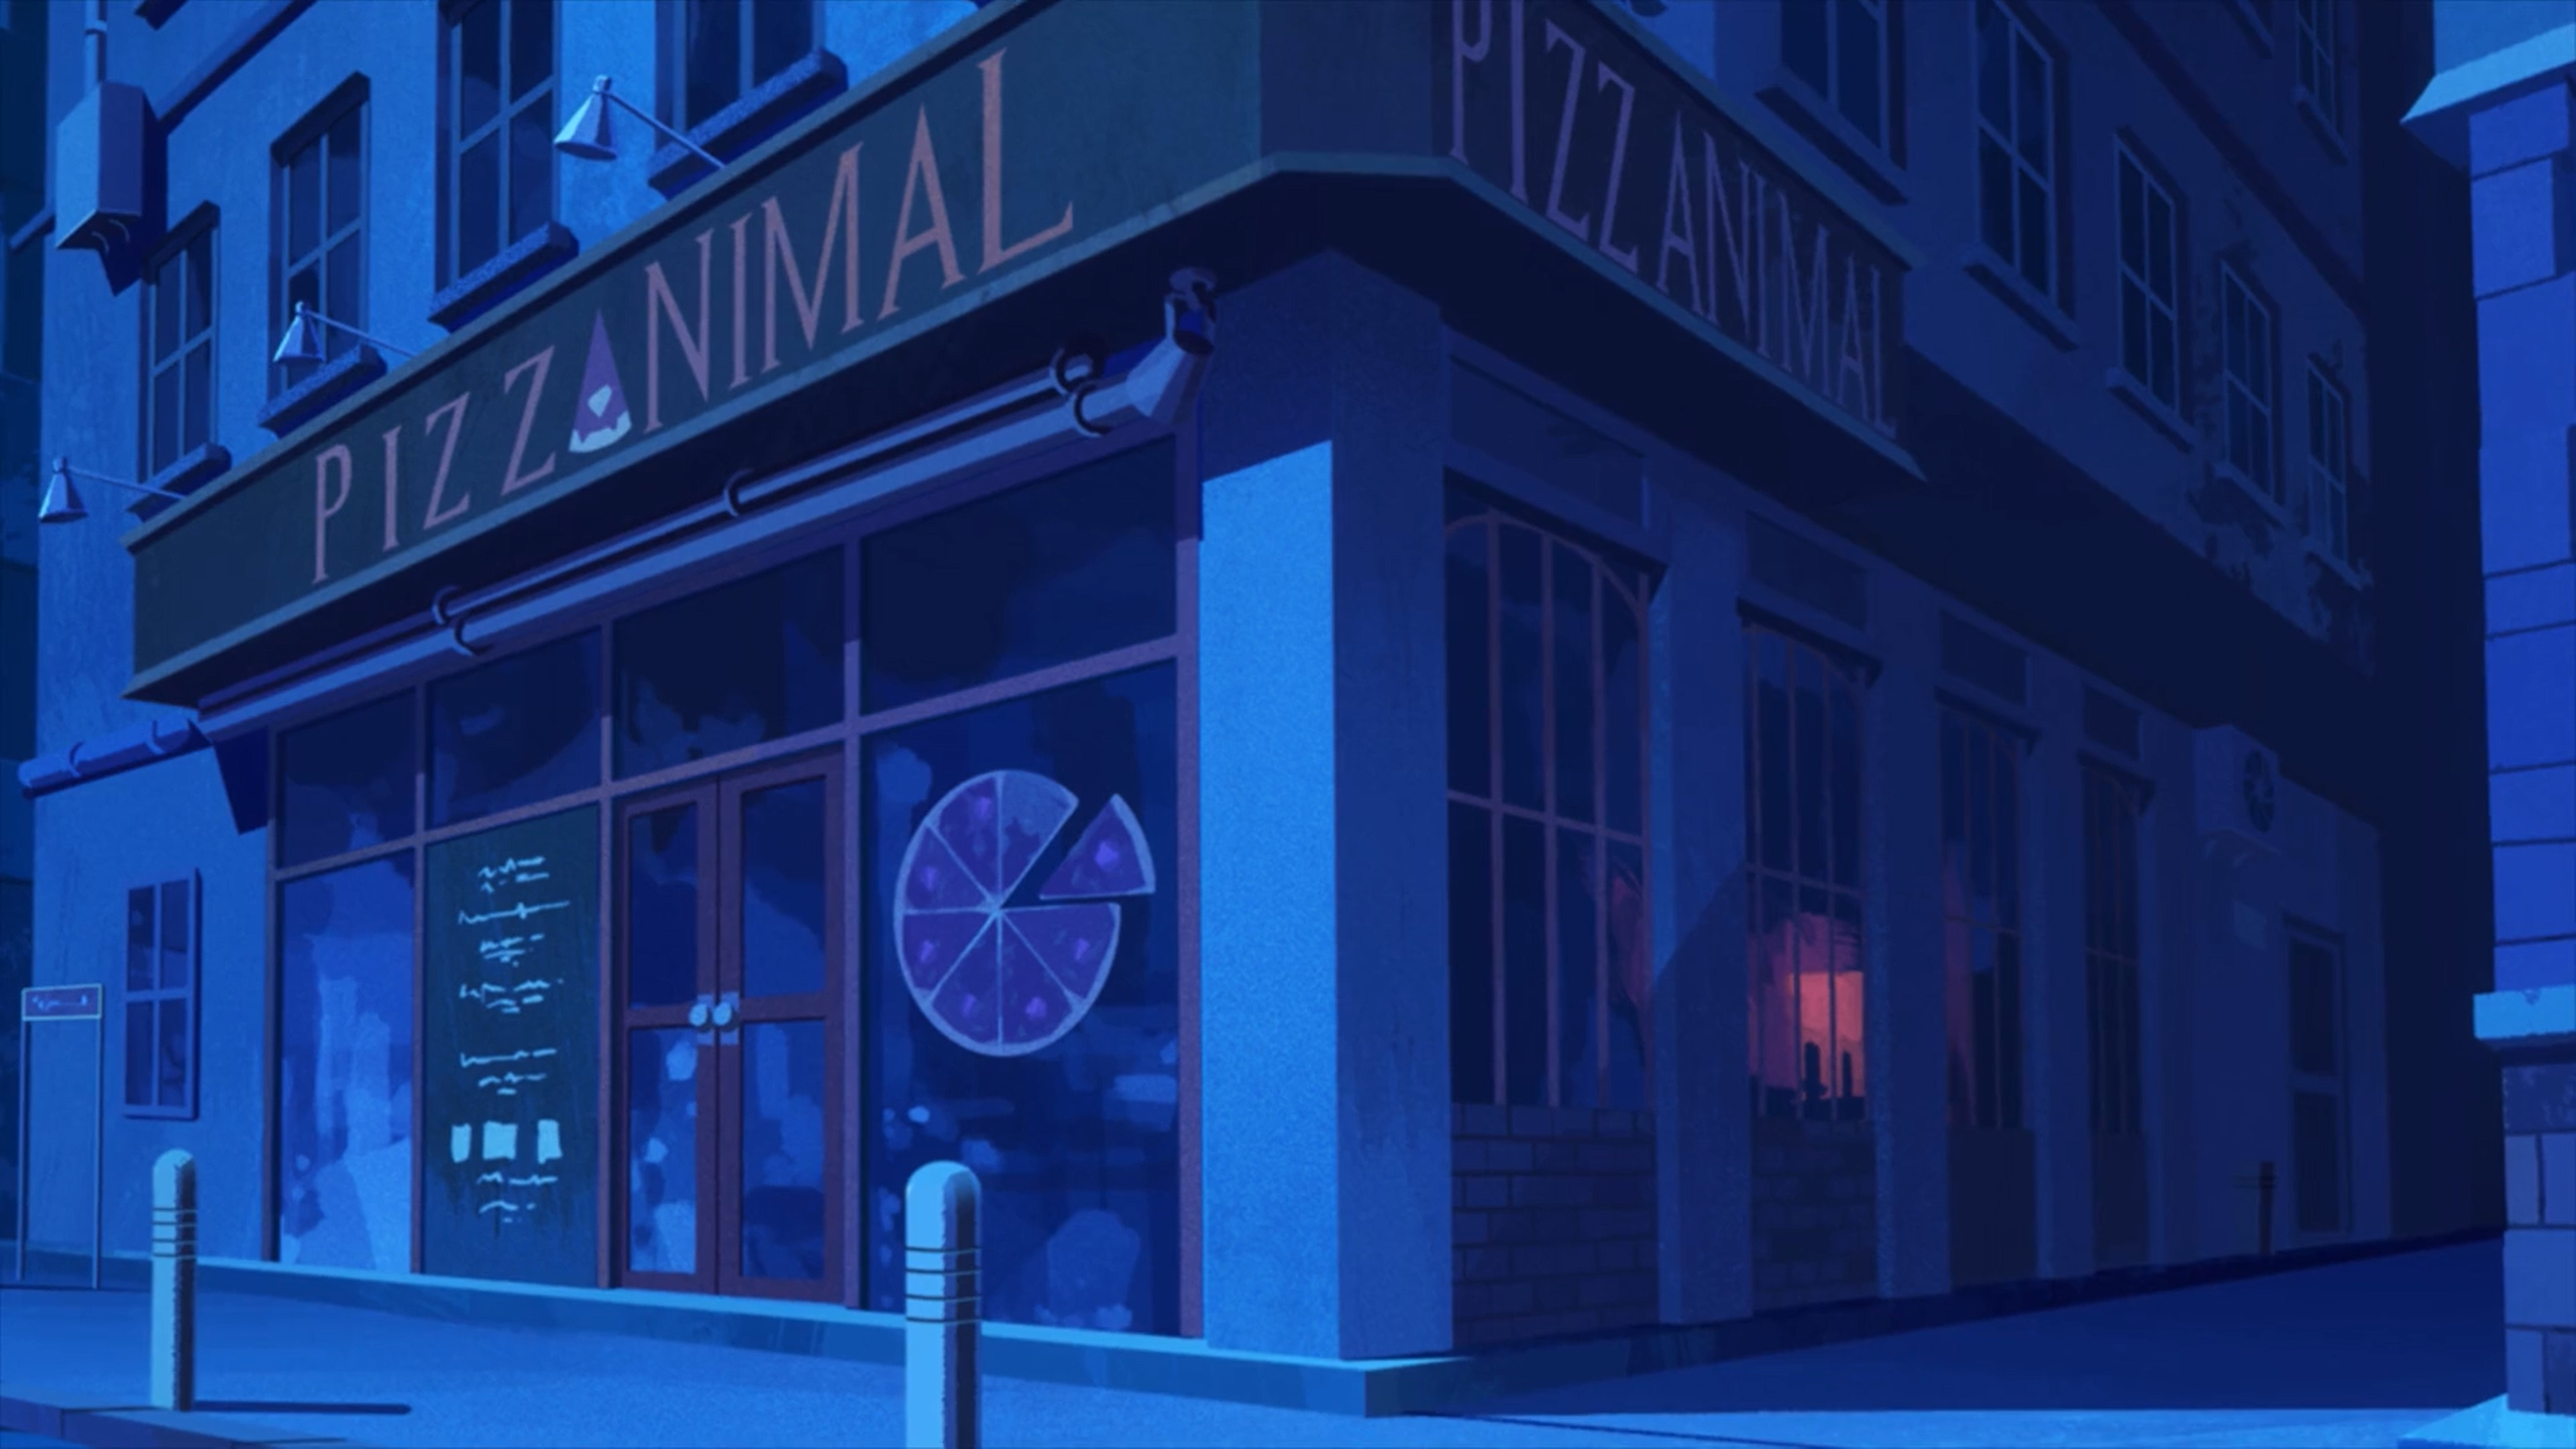 Pizzanimals | Brand New Animal Wiki | Fandom